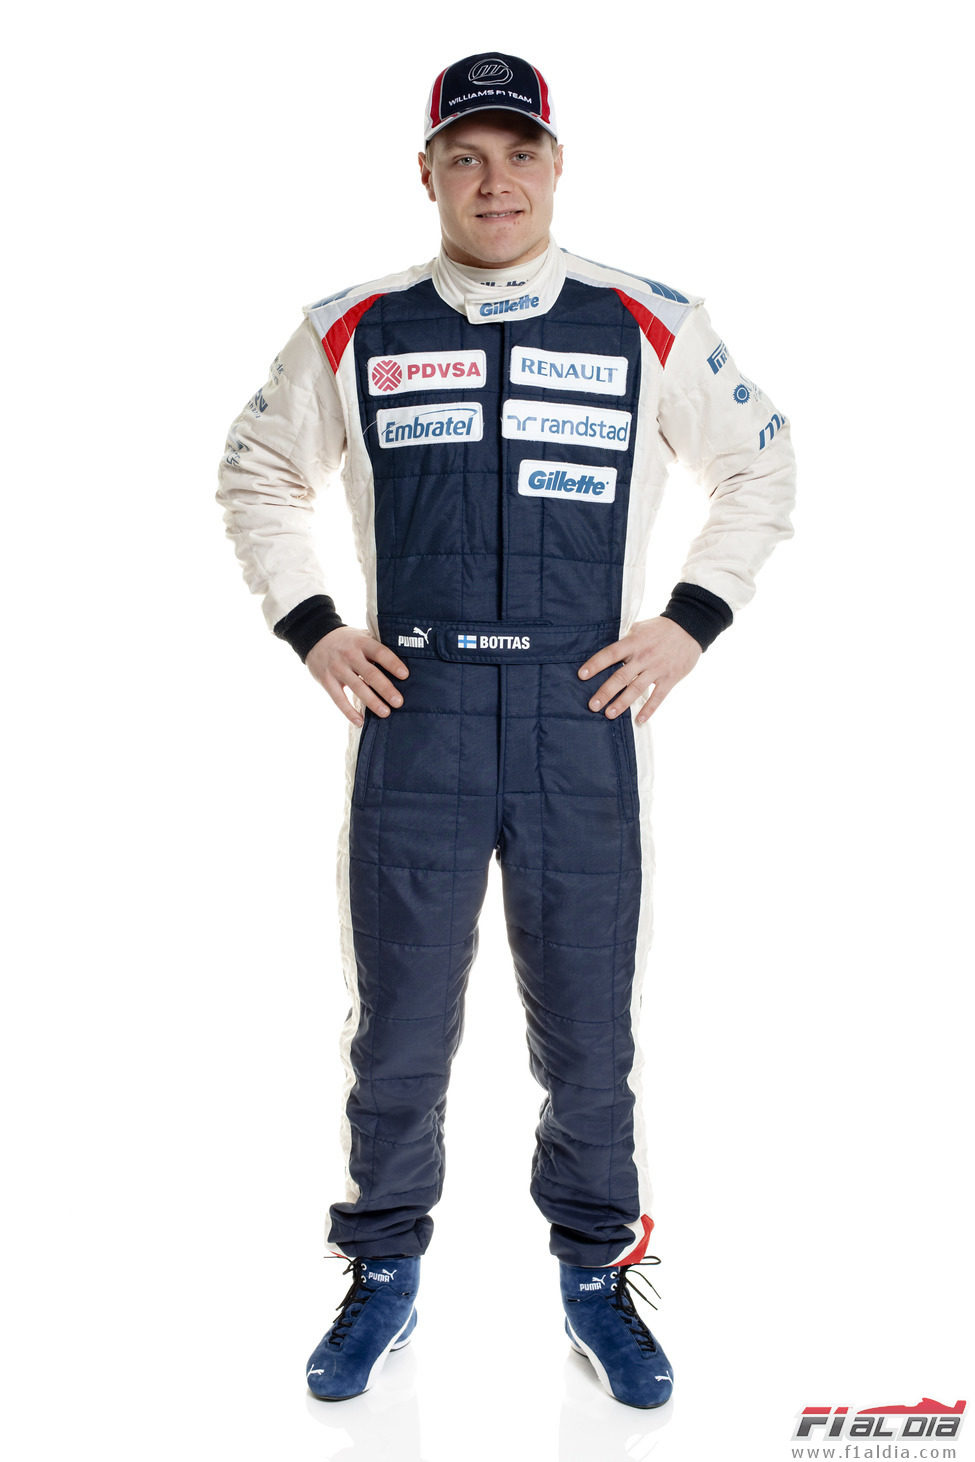 Valtteri Bottas, piloto probador de Williams para 2012